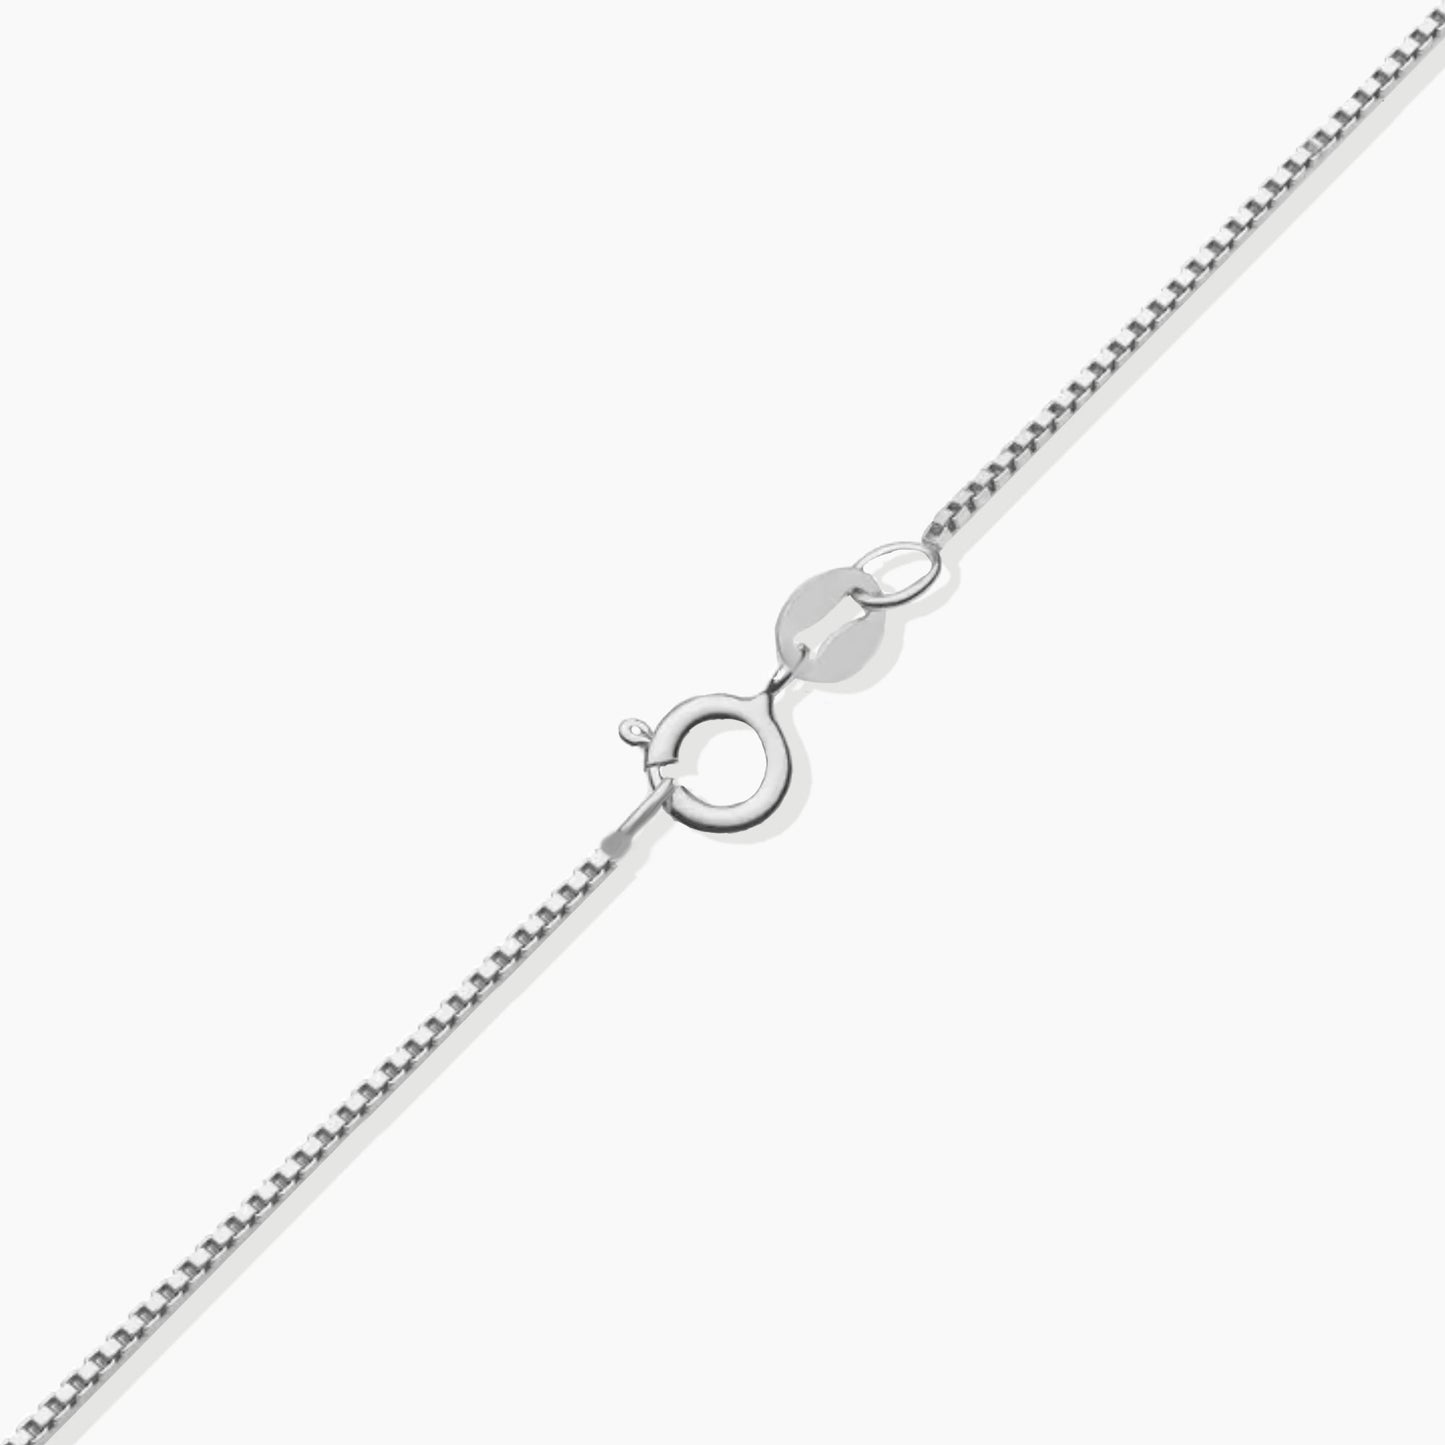 Garnet Drop Pendant Necklace in Sterling Silver